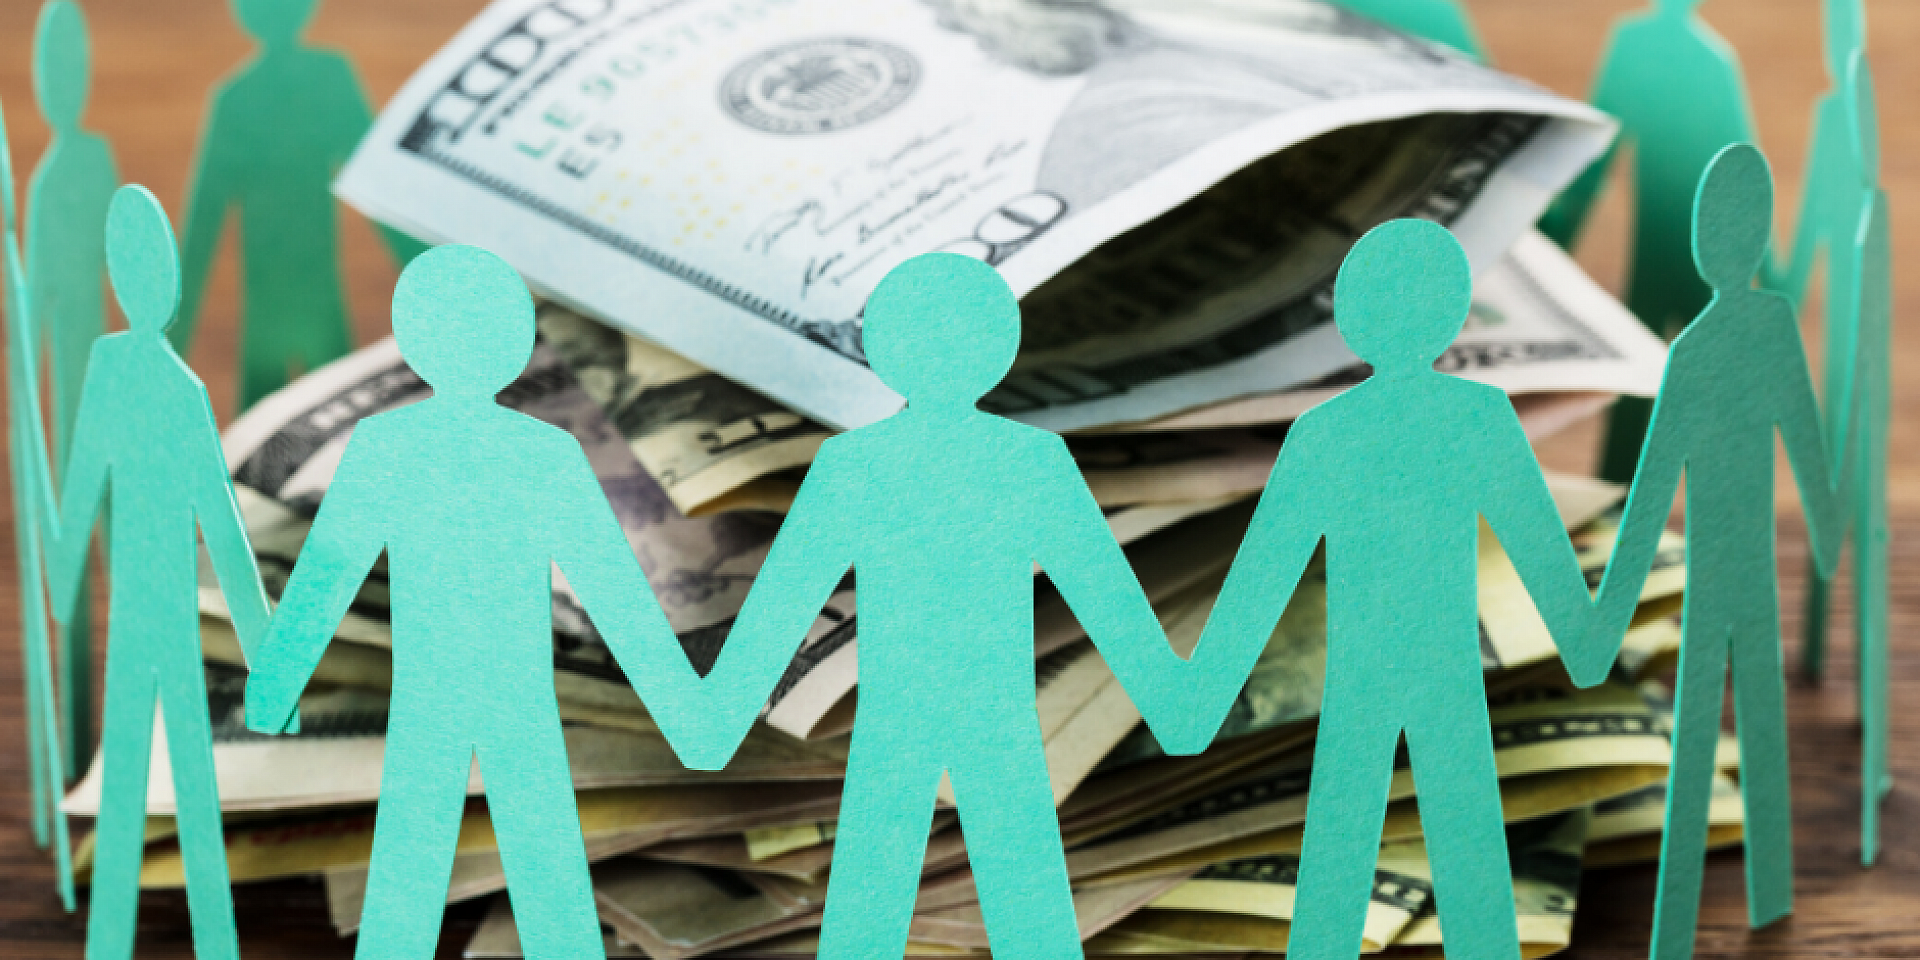 Paper cutout family surrounding money